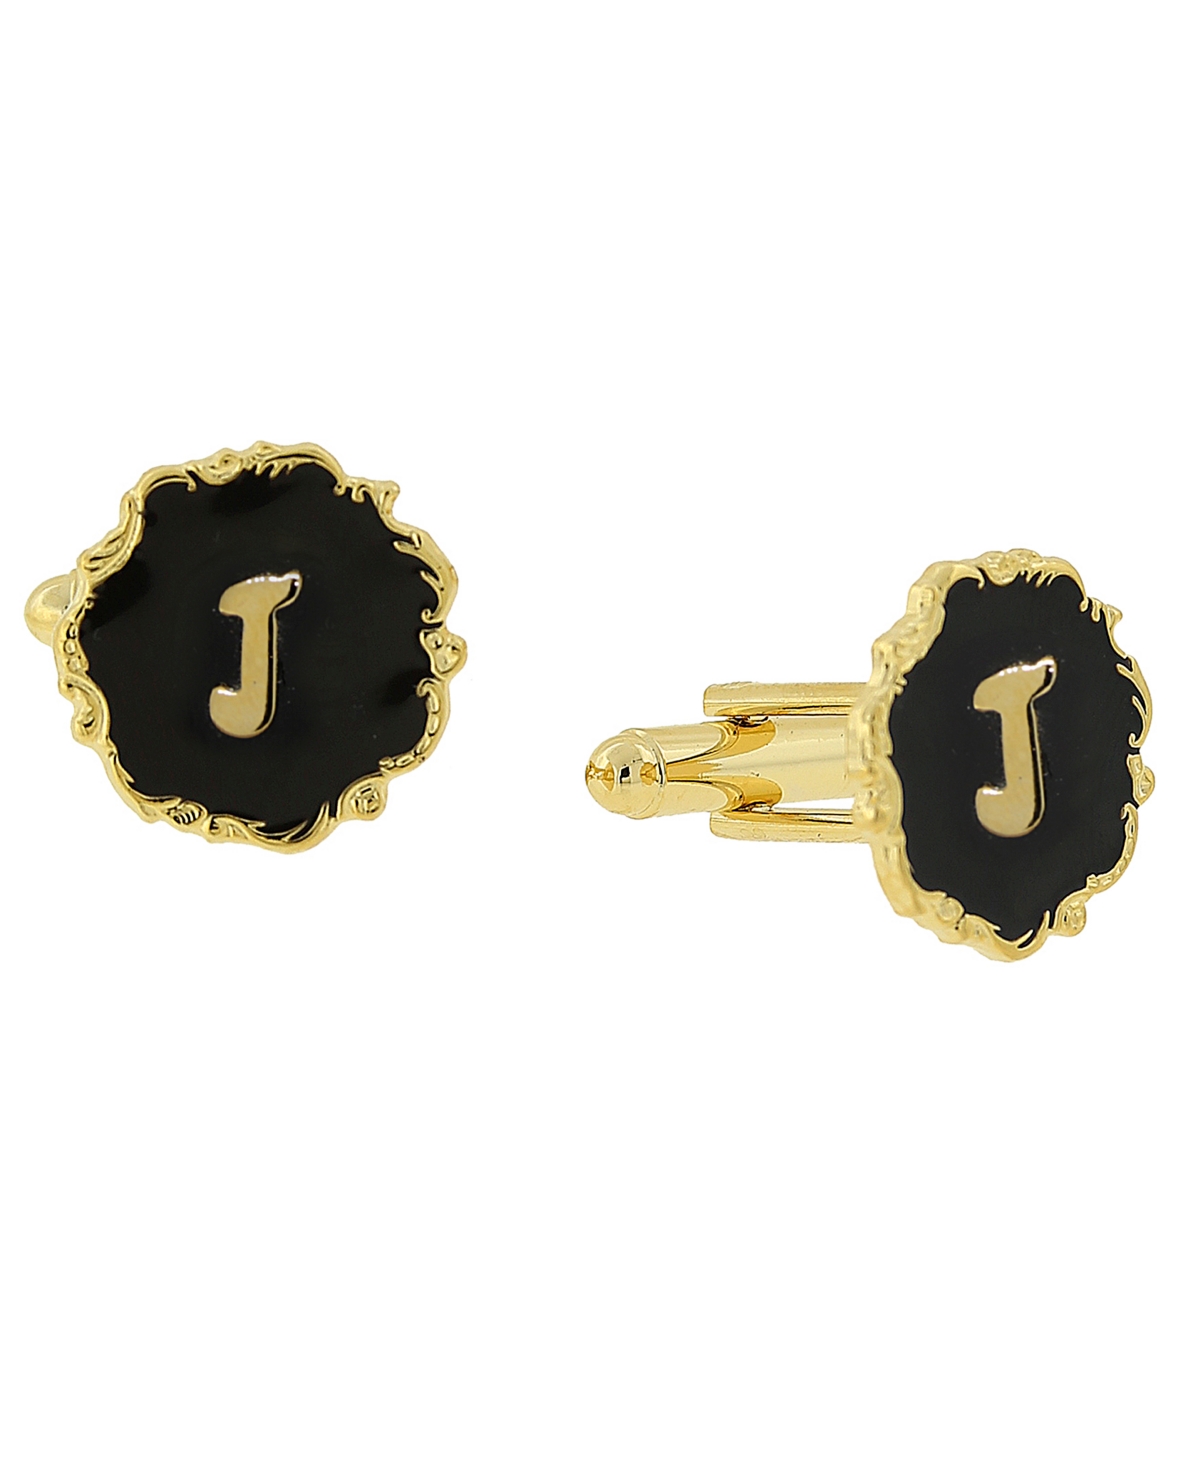 Jewelry 14K Gold-Plated Enamel Initial J Cufflinks - Black